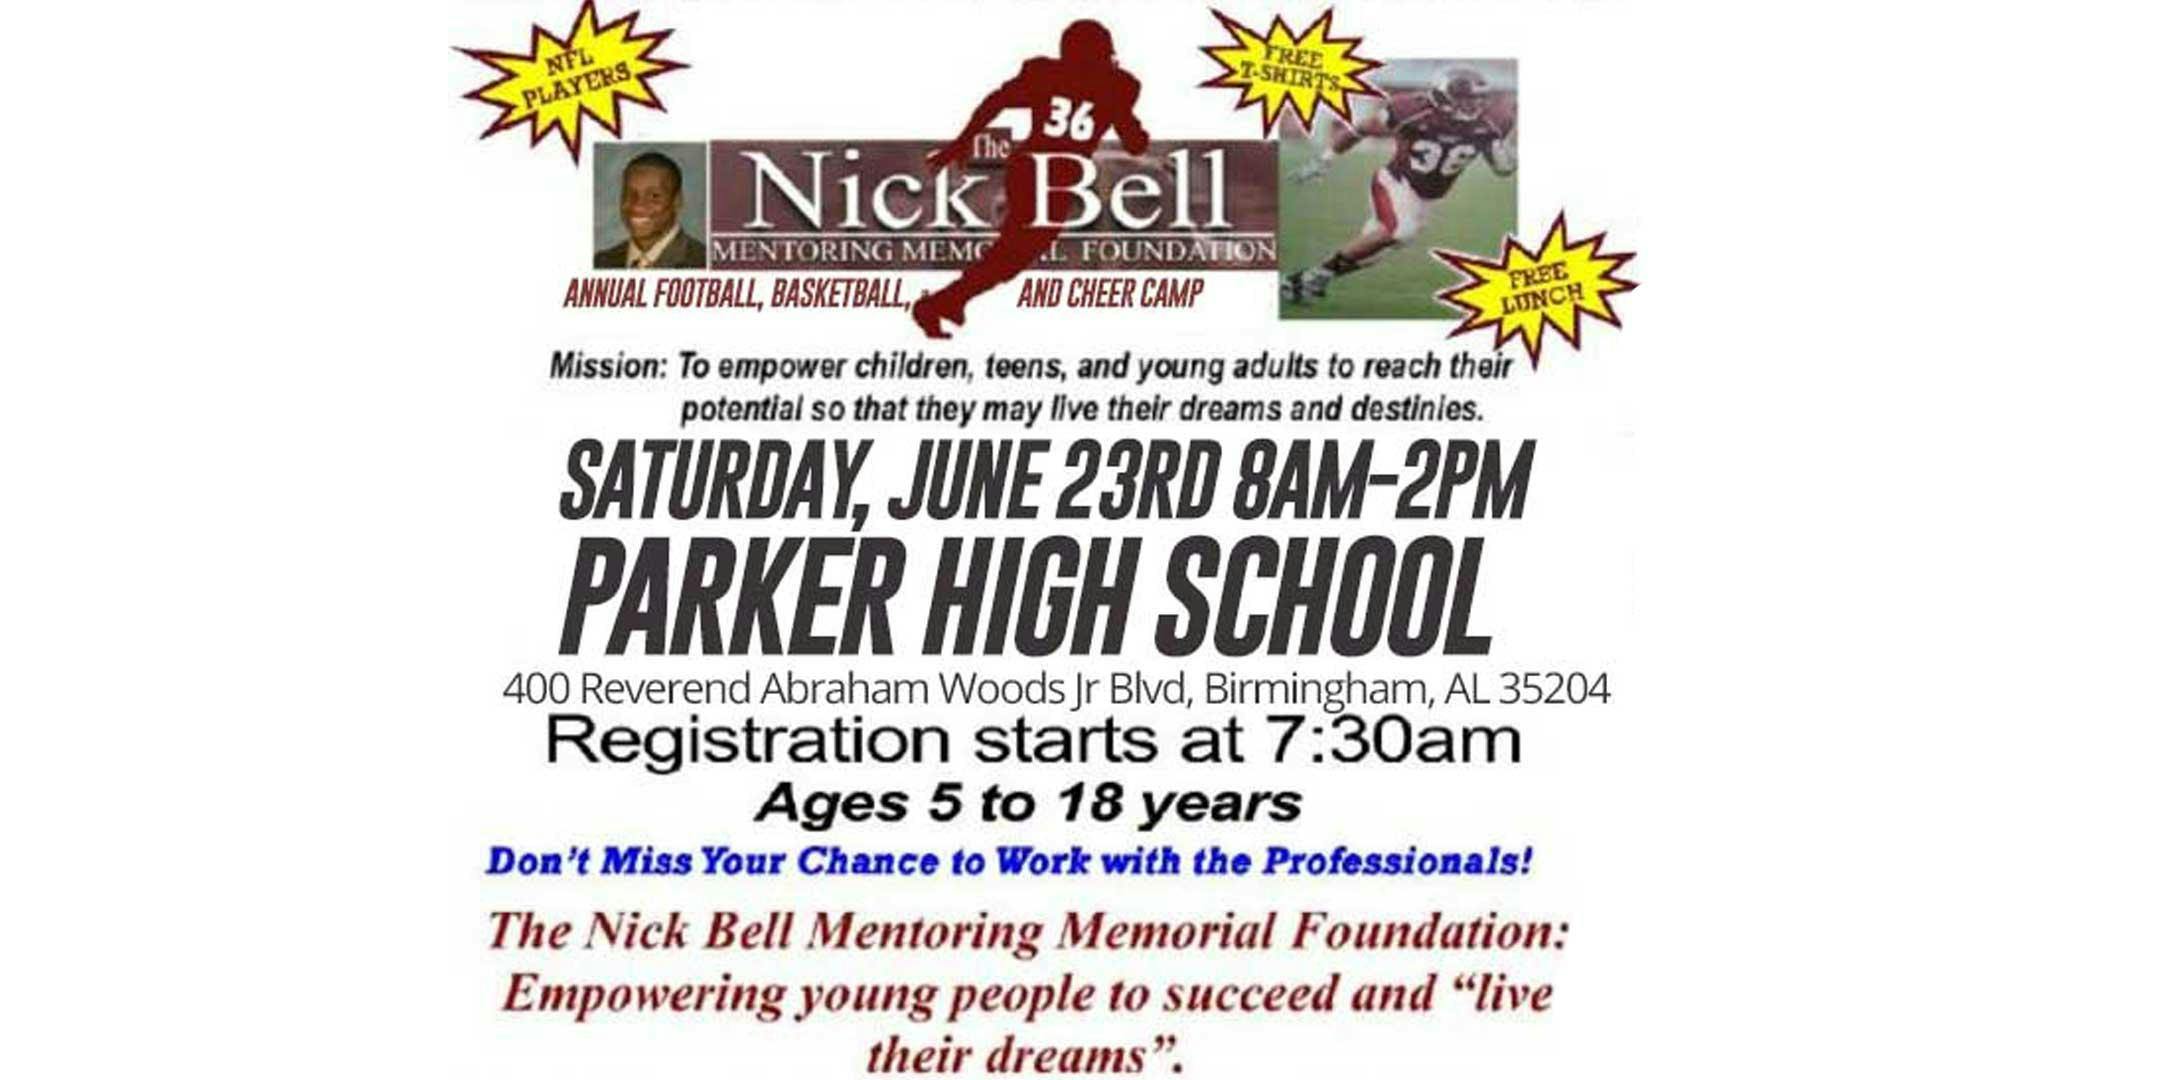 Nick Bell Football, Basketball and Cheer camp.